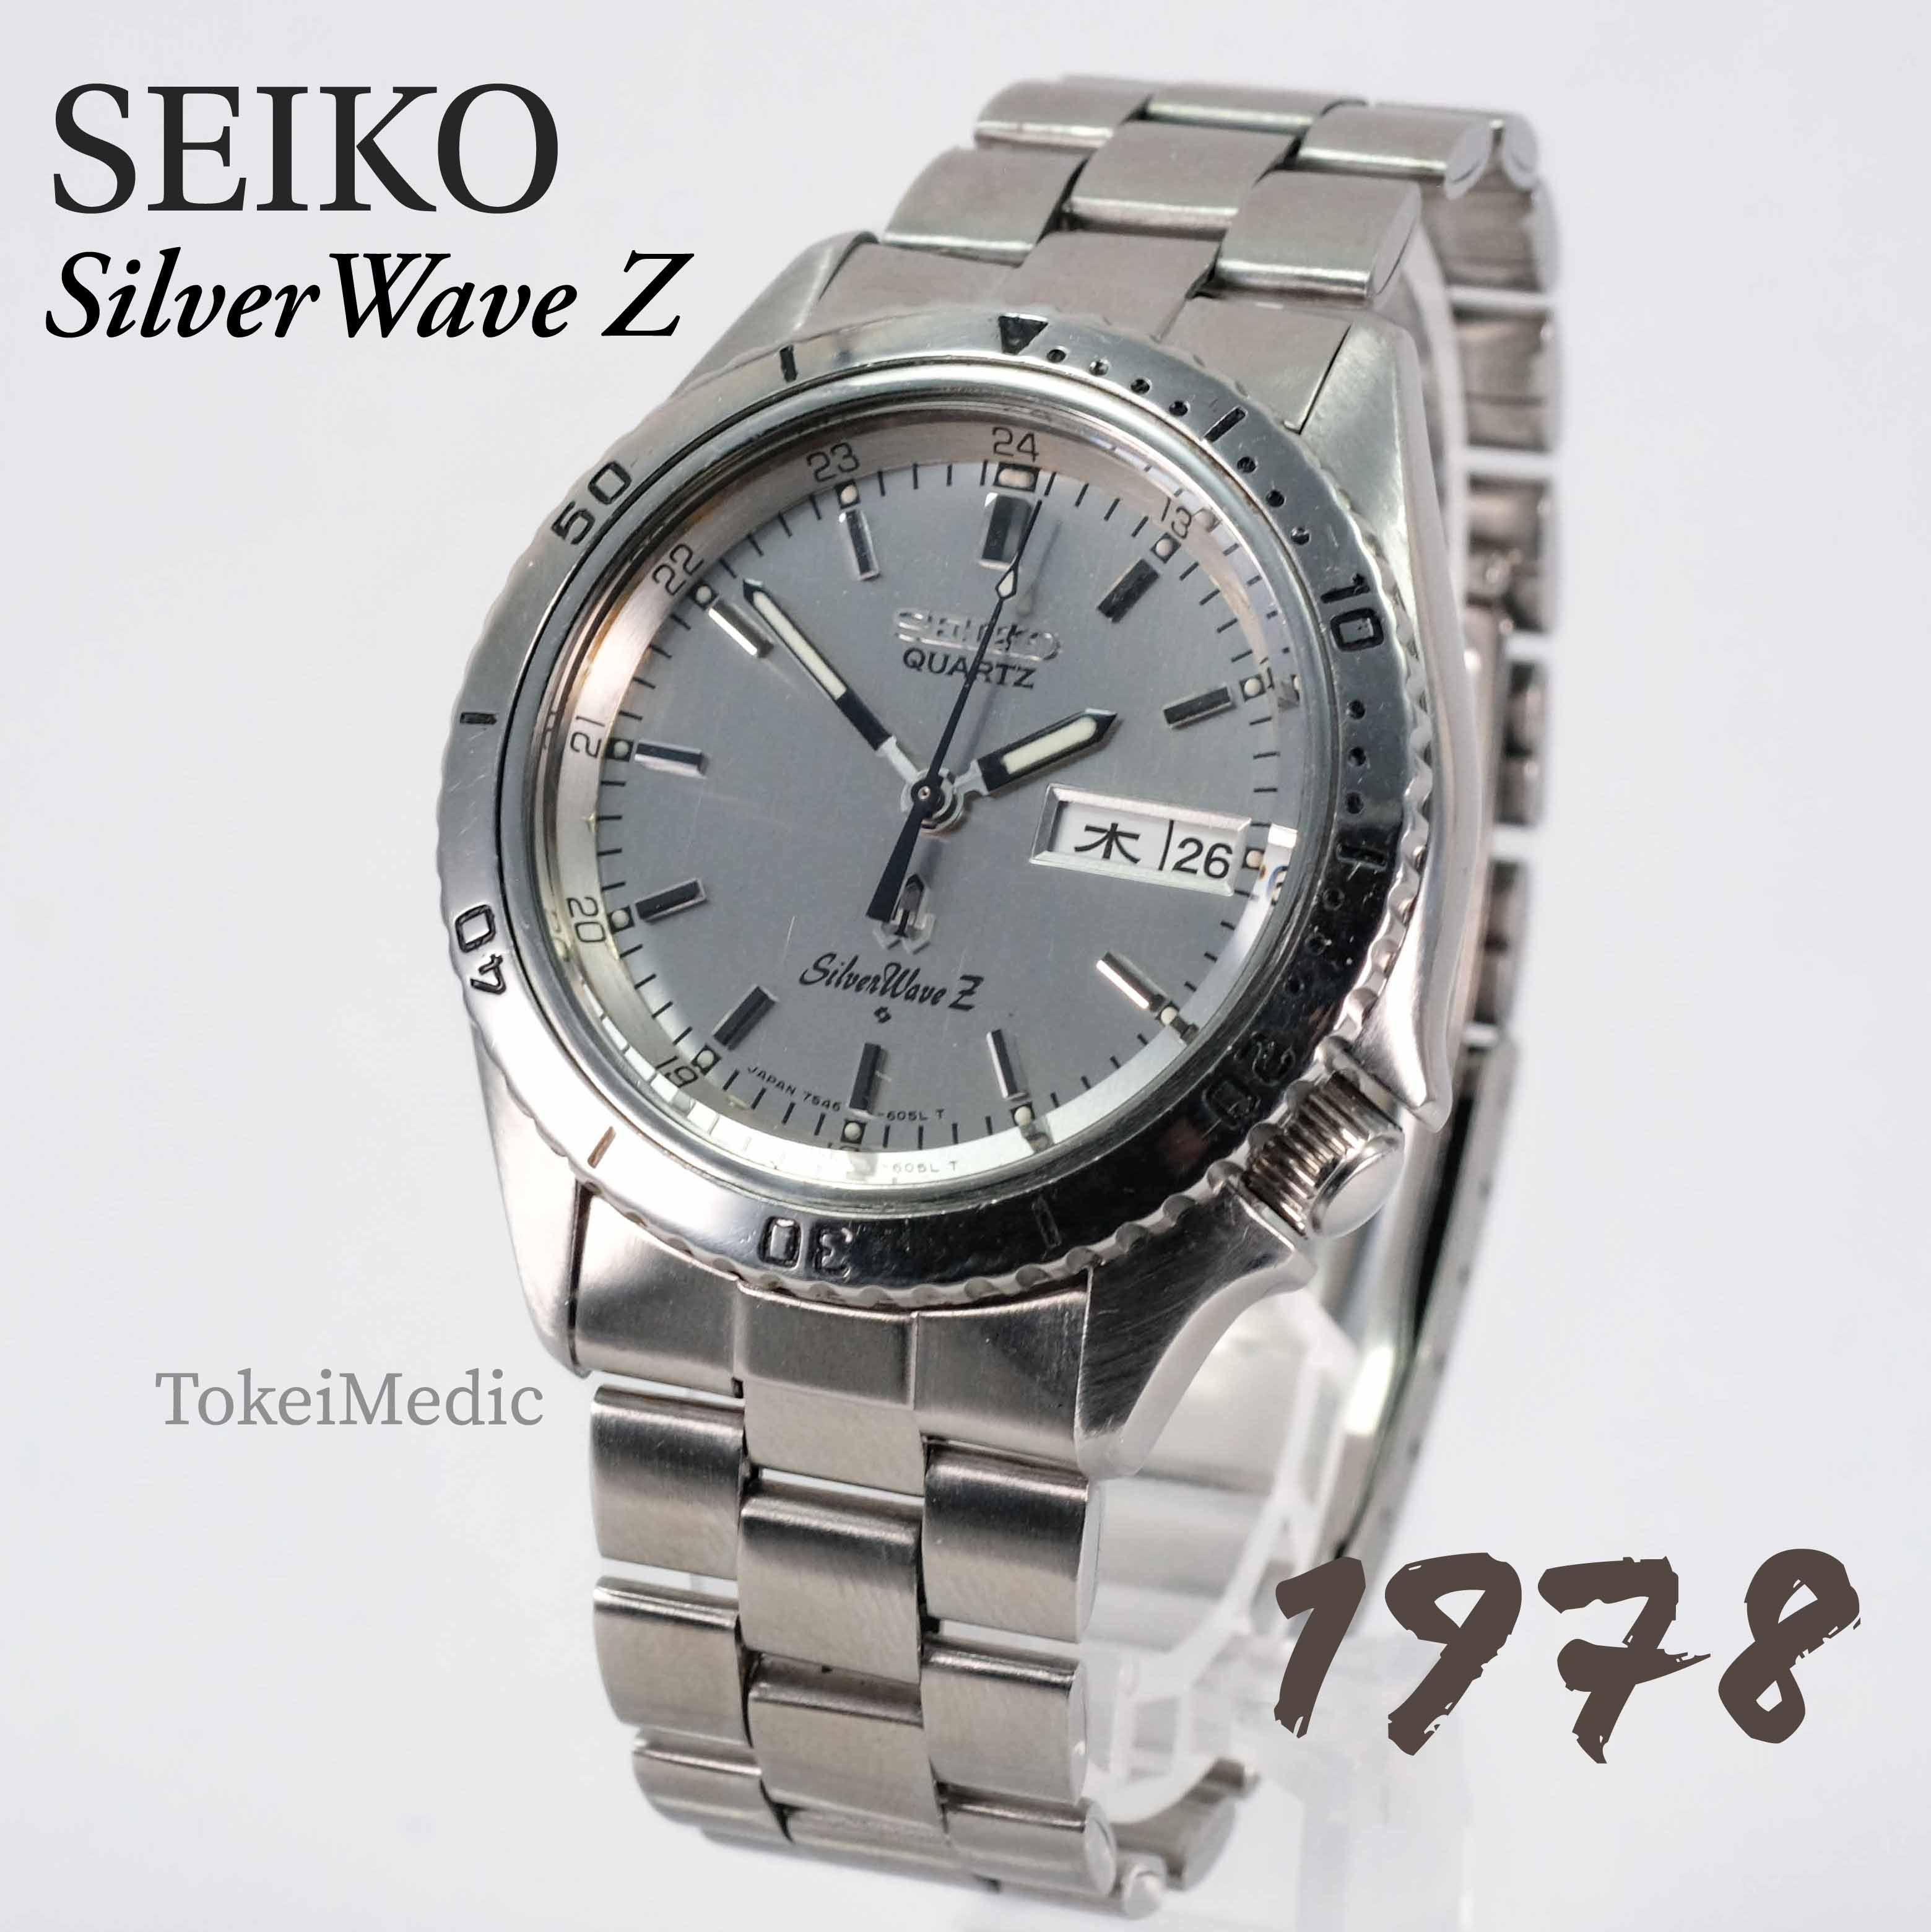 SEIKO SILVER WAVE Z 7546-605Aメンズクォーツウォッチヴィンテージ